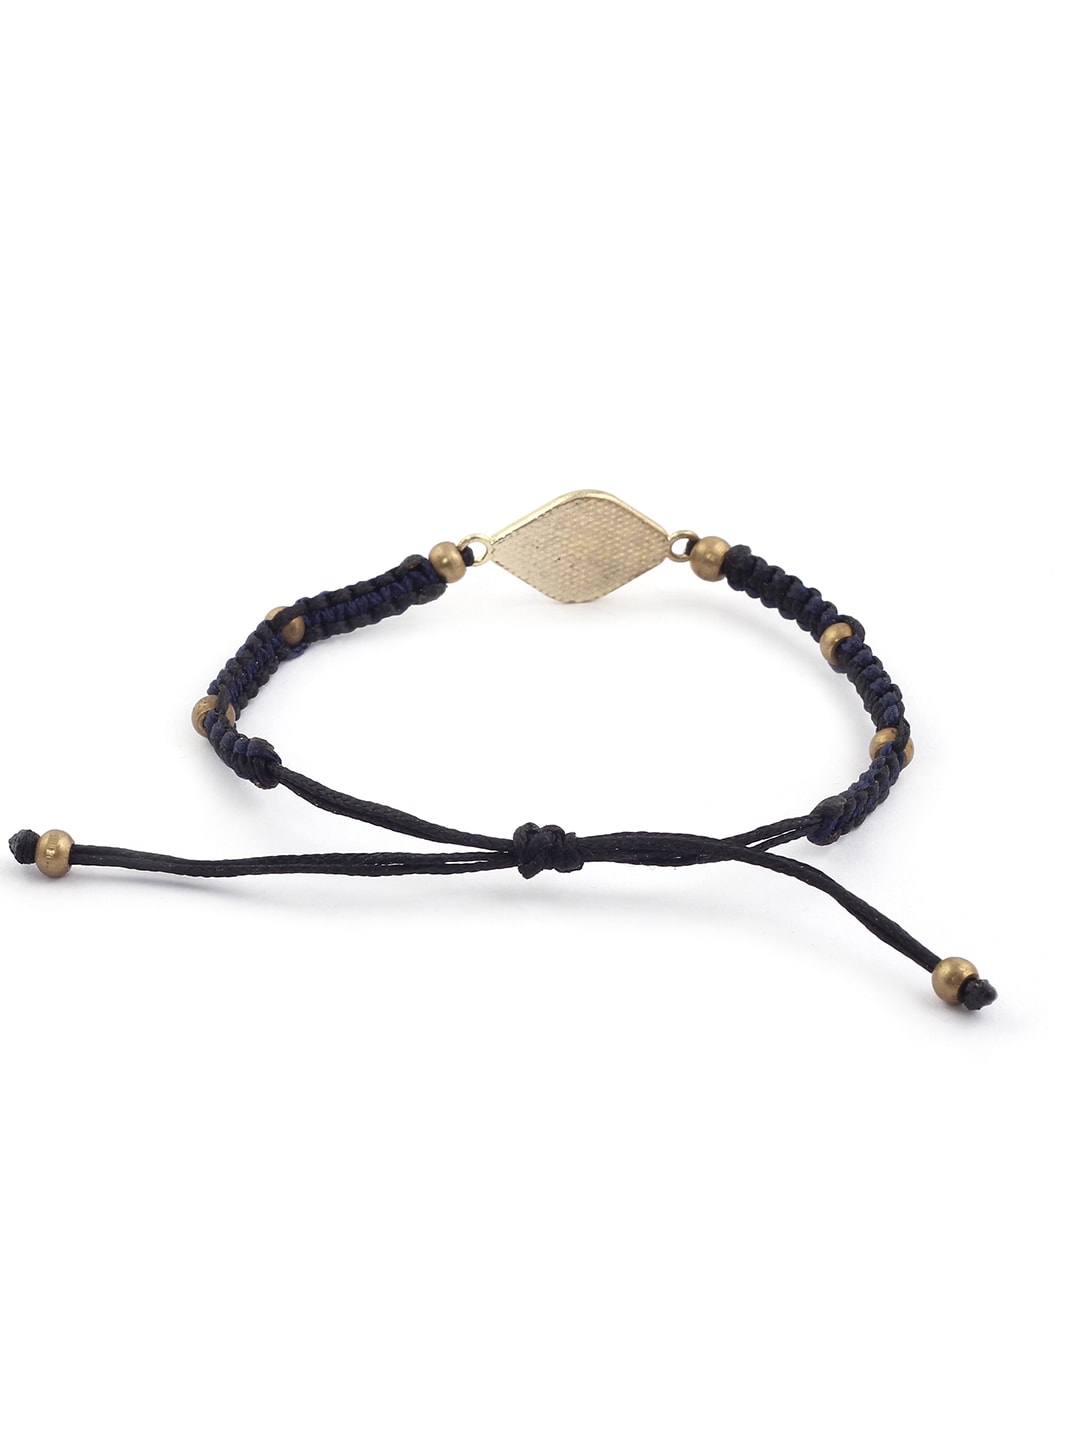 EL REGALO Men Blue & Gold-Toned Charm Bracelet - for Men
Style ID: 17157494